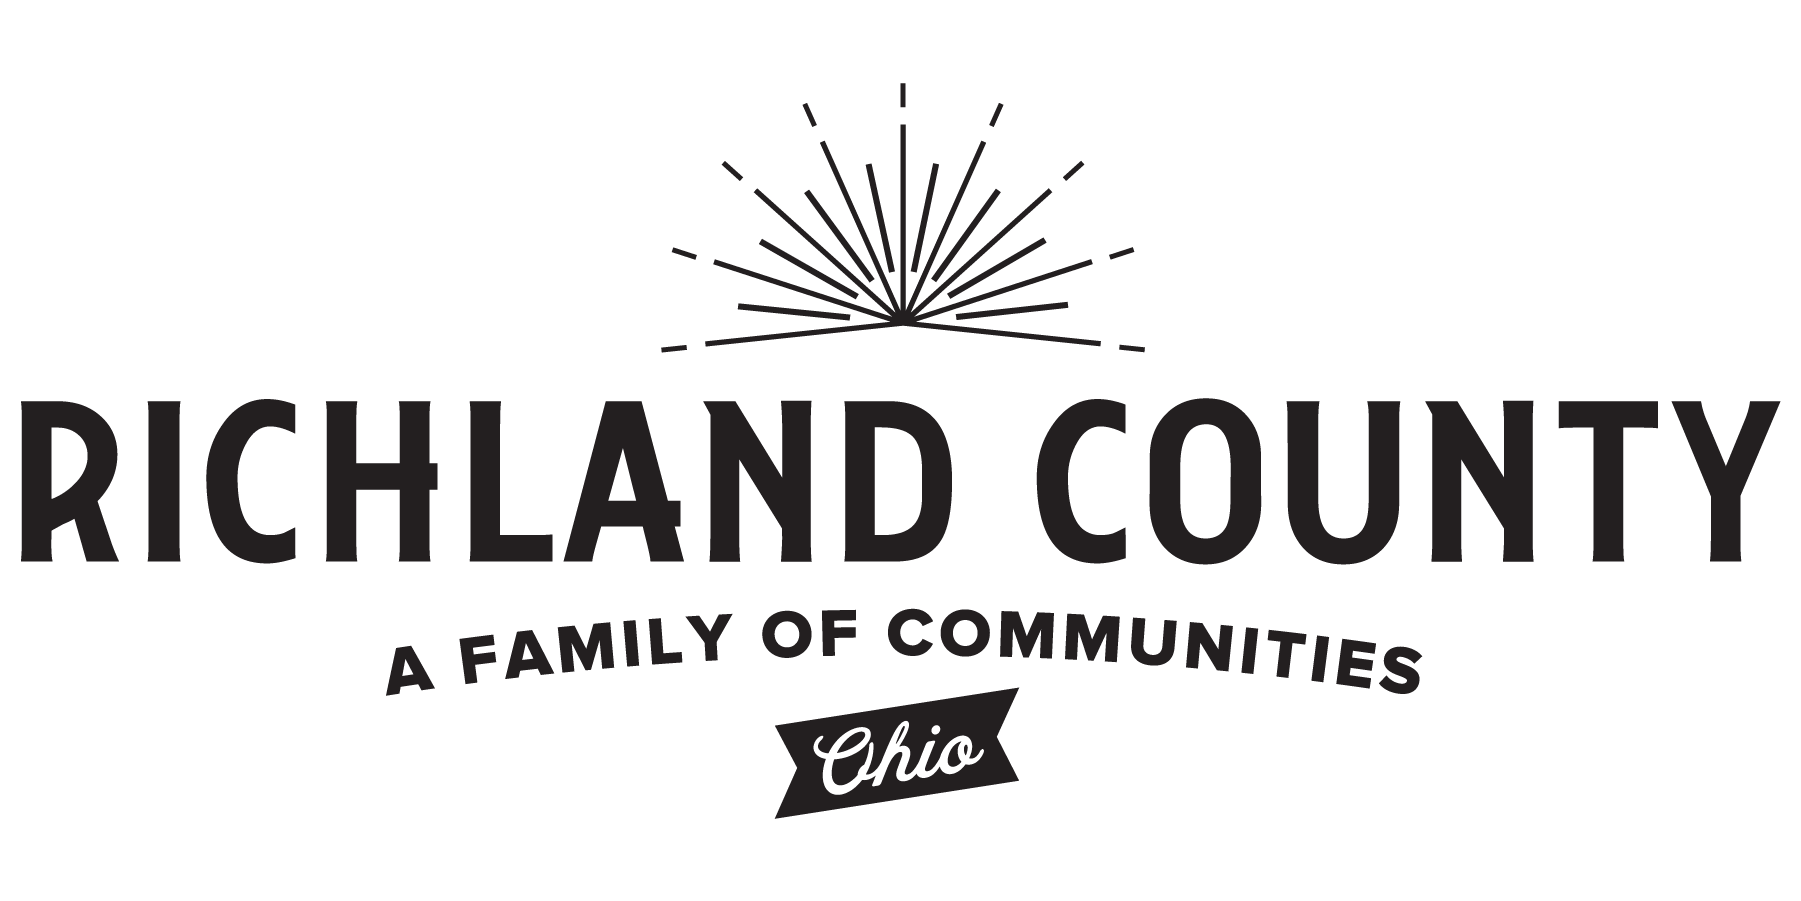 Richland county logo